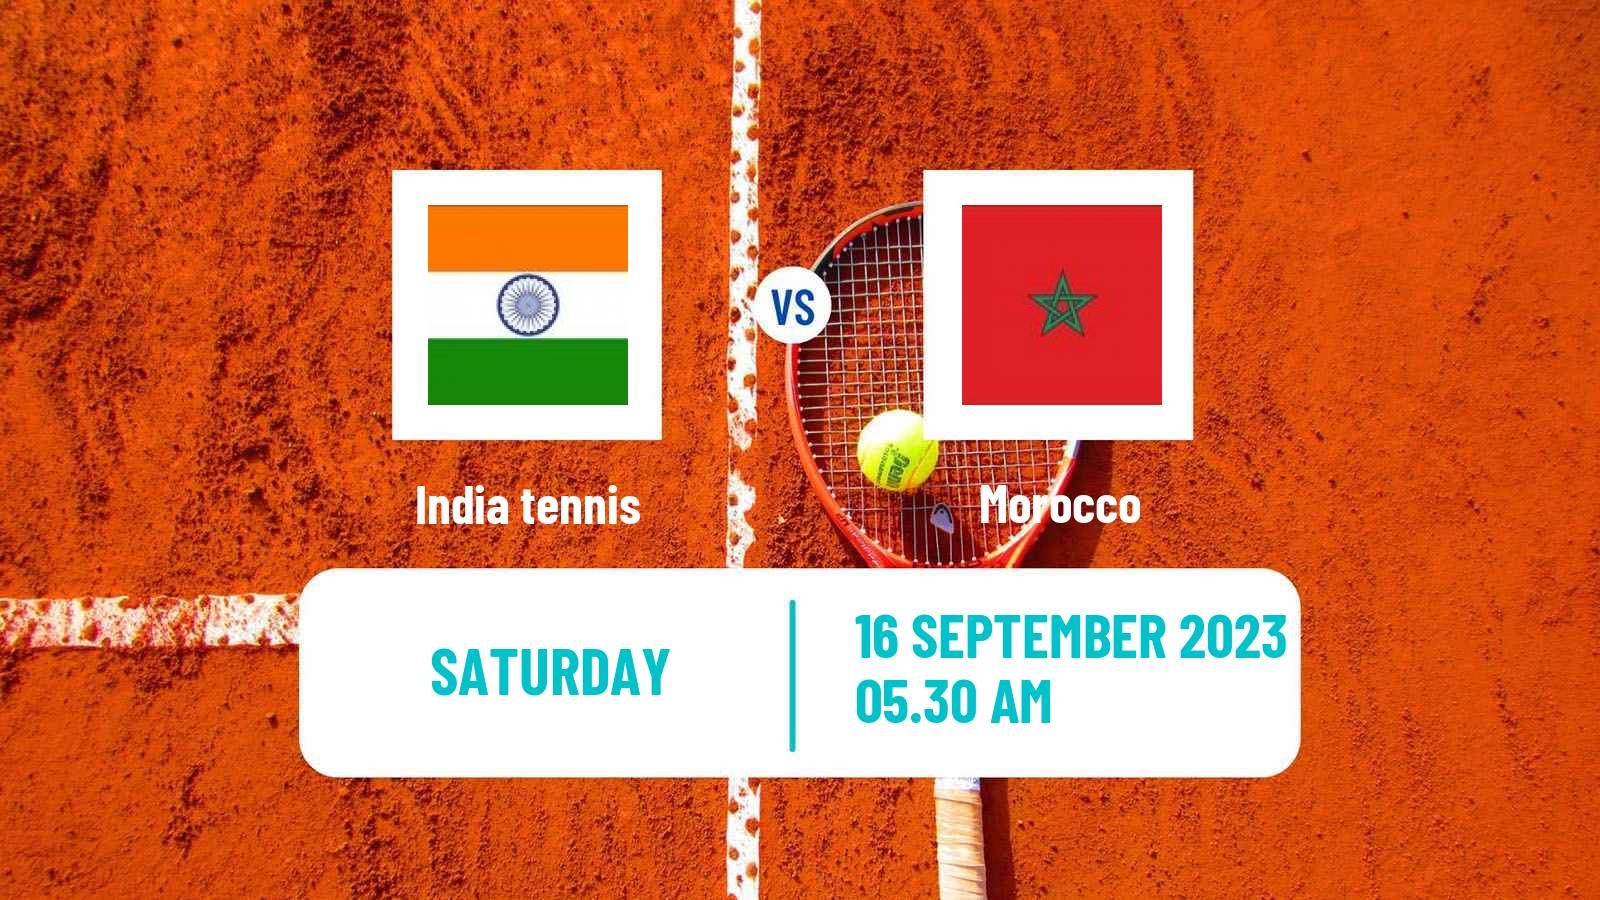 Tennis Davis Cup World Group II Teams India - Morocco